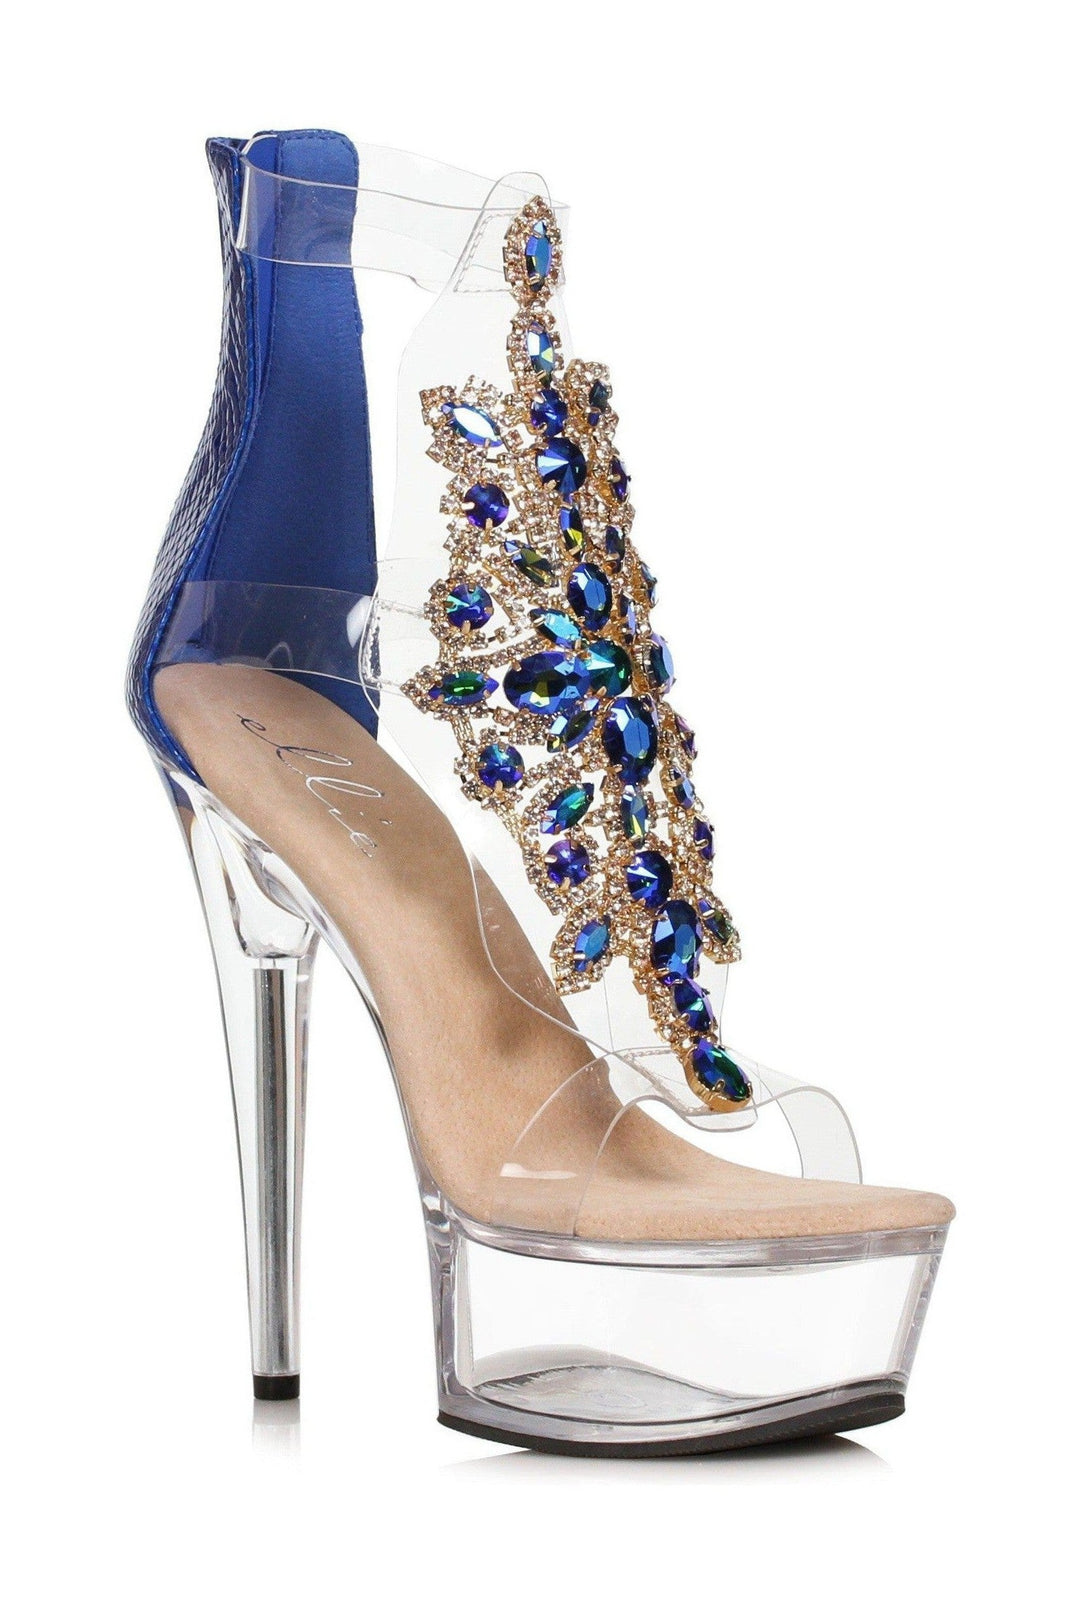 Ellie Shoes Blue Sandals Platform Stripper Shoes | Buy at Sexyshoes.com